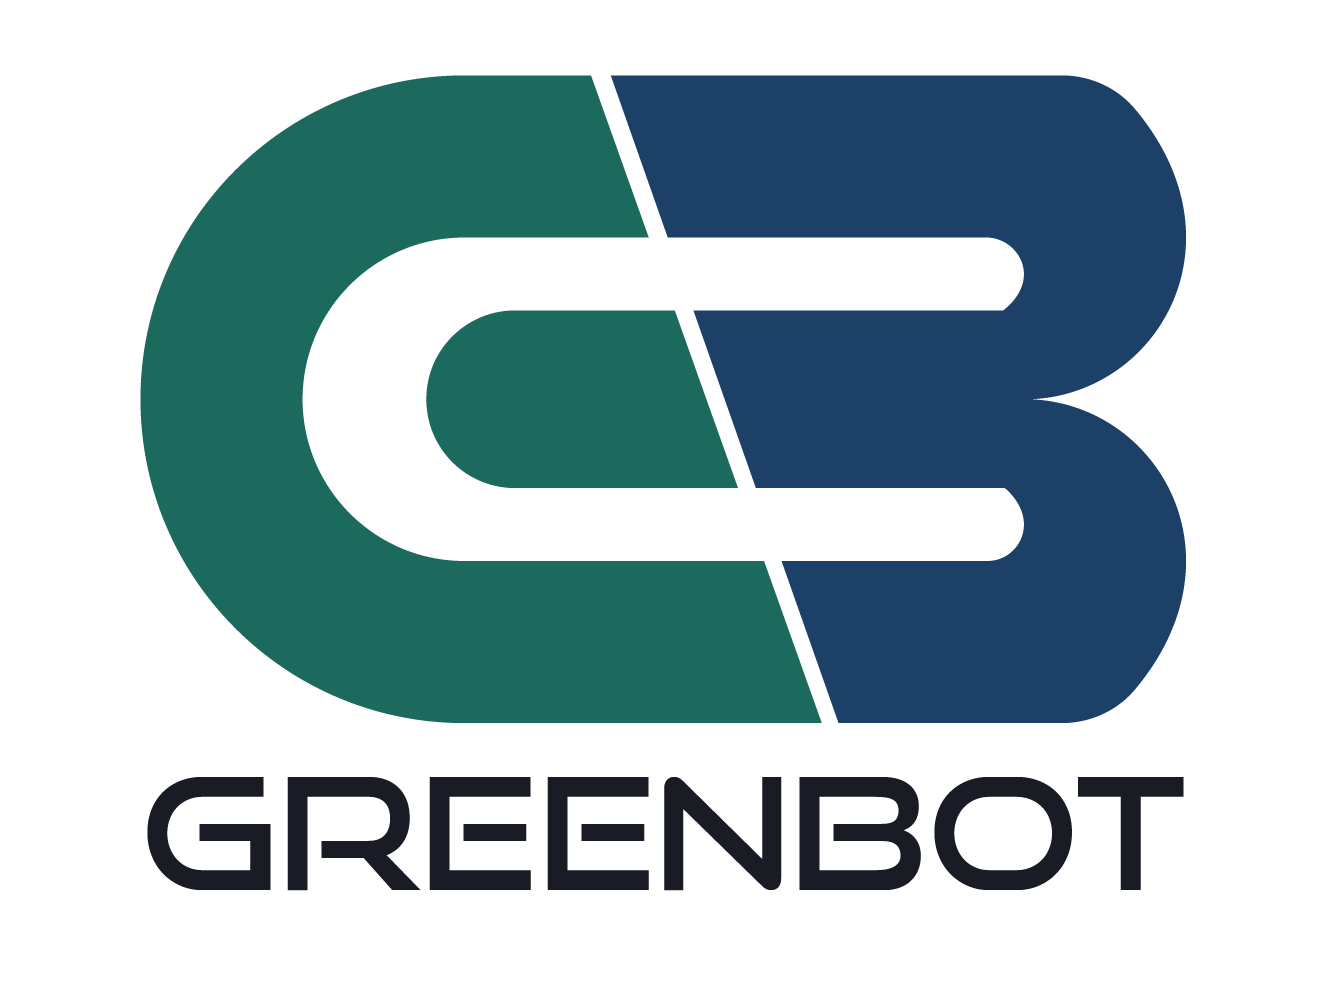 Global Greenbot Company Limited